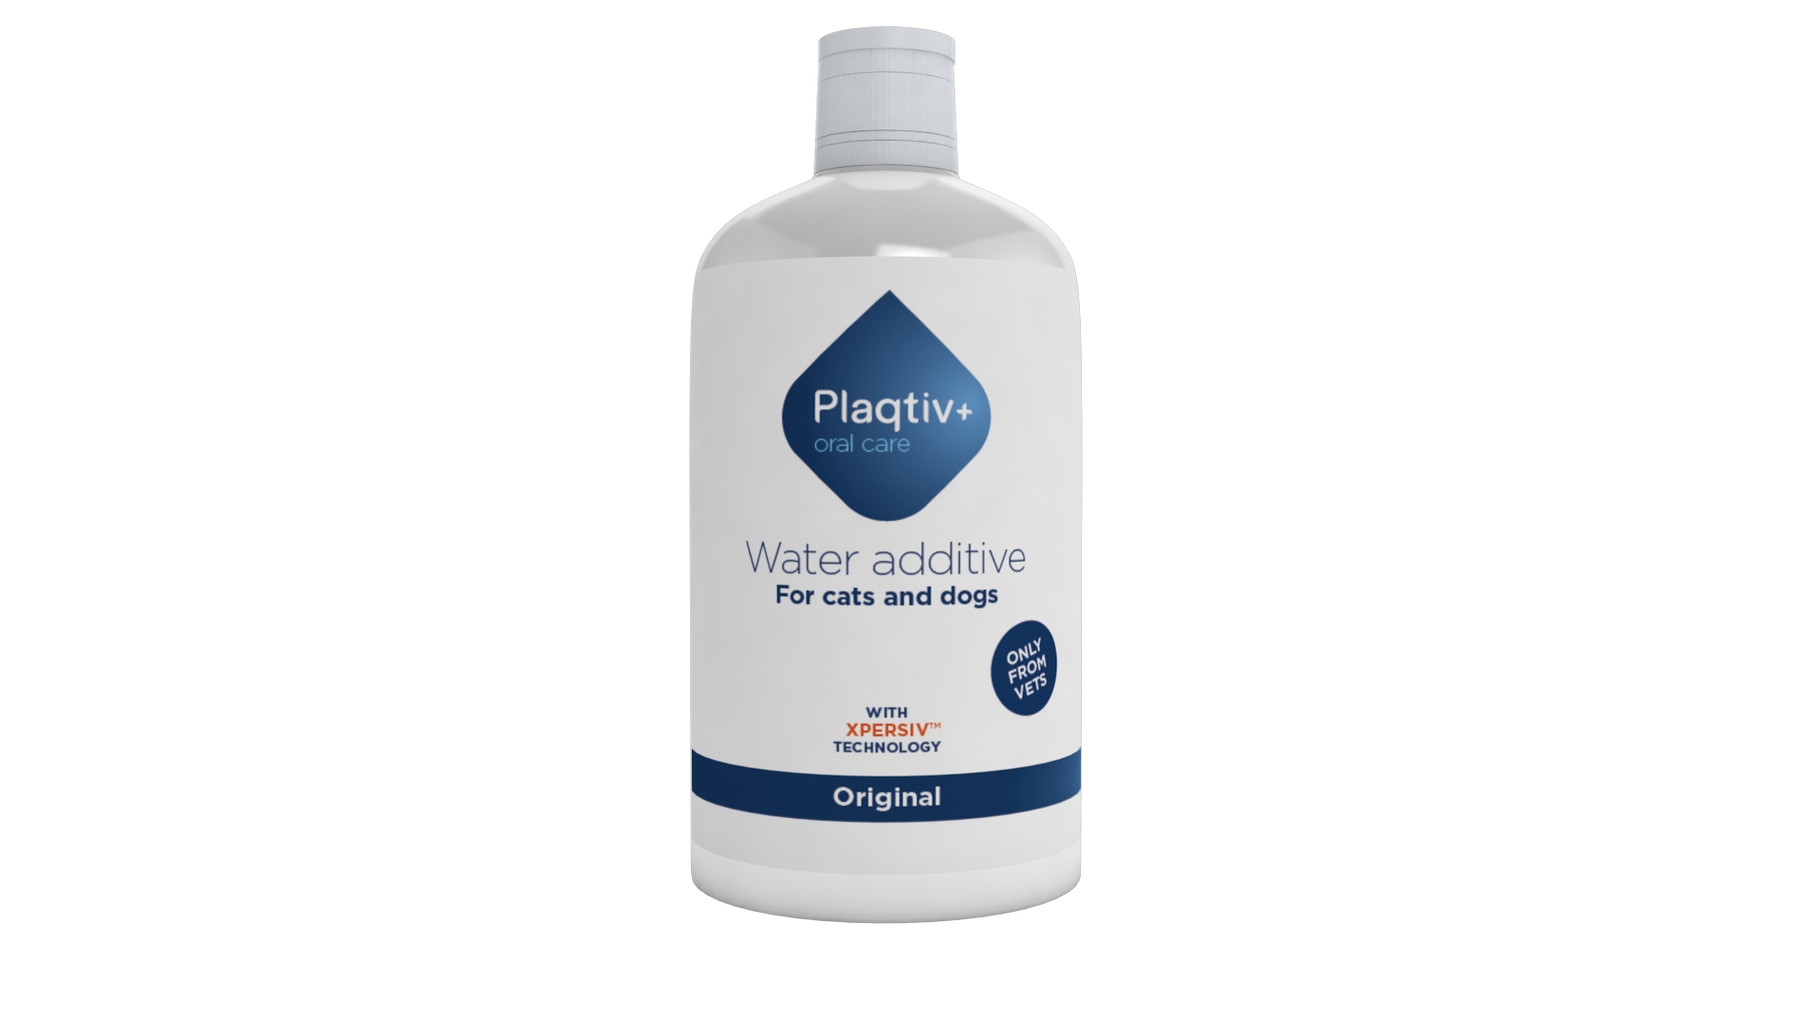 Plaqtiv + Oral Care Water Additive